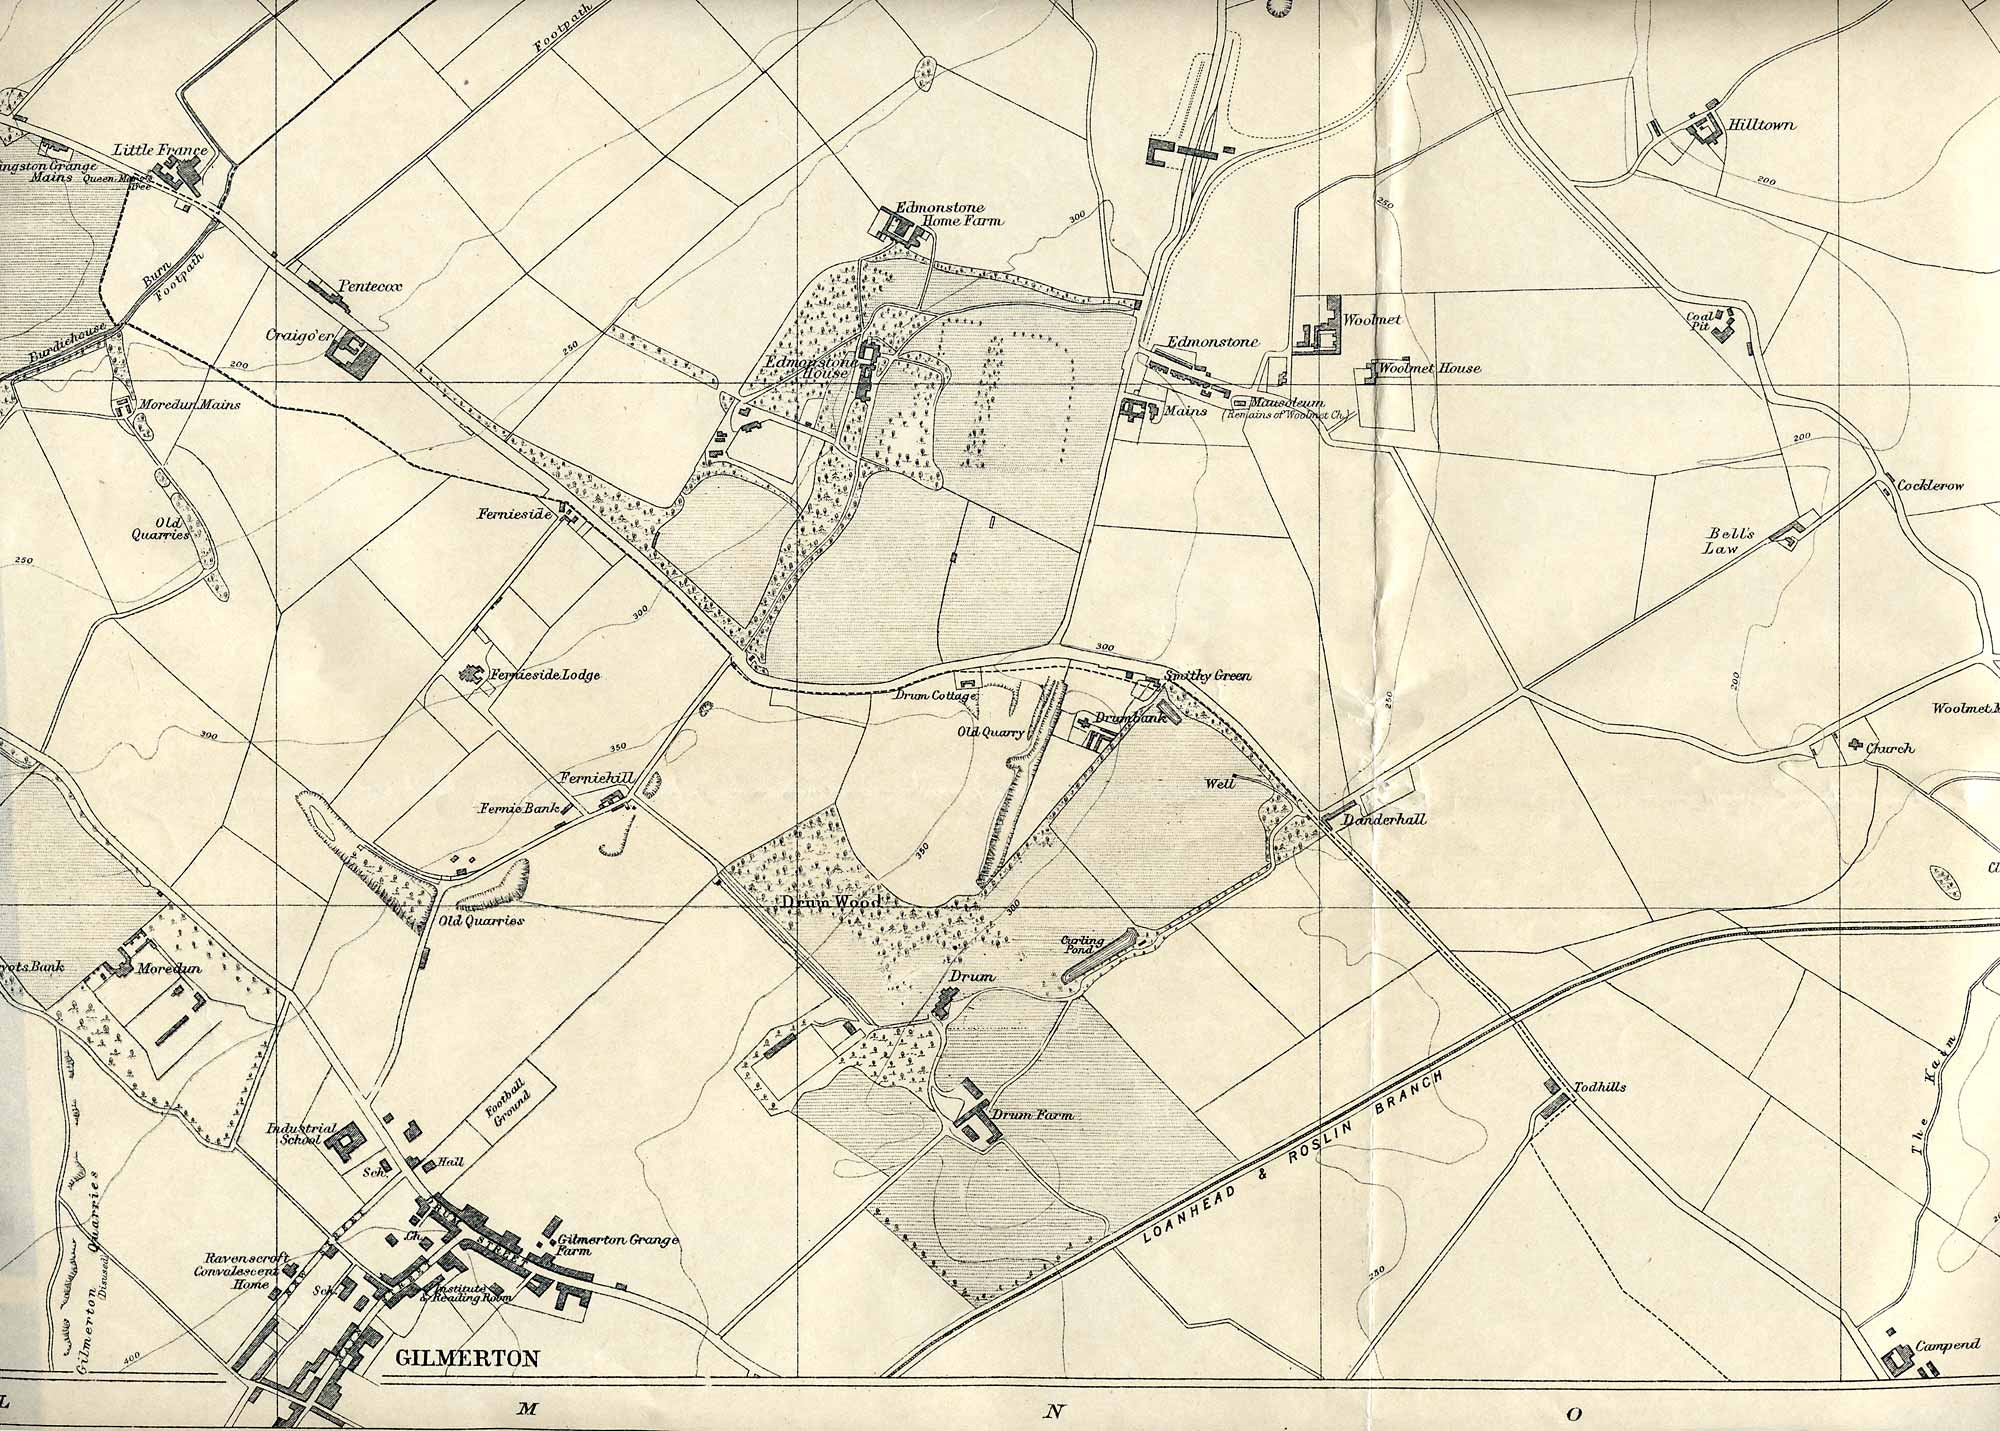 Edinburgh and Leith map, 1925  -  Gilmerton section  -  Enlarged